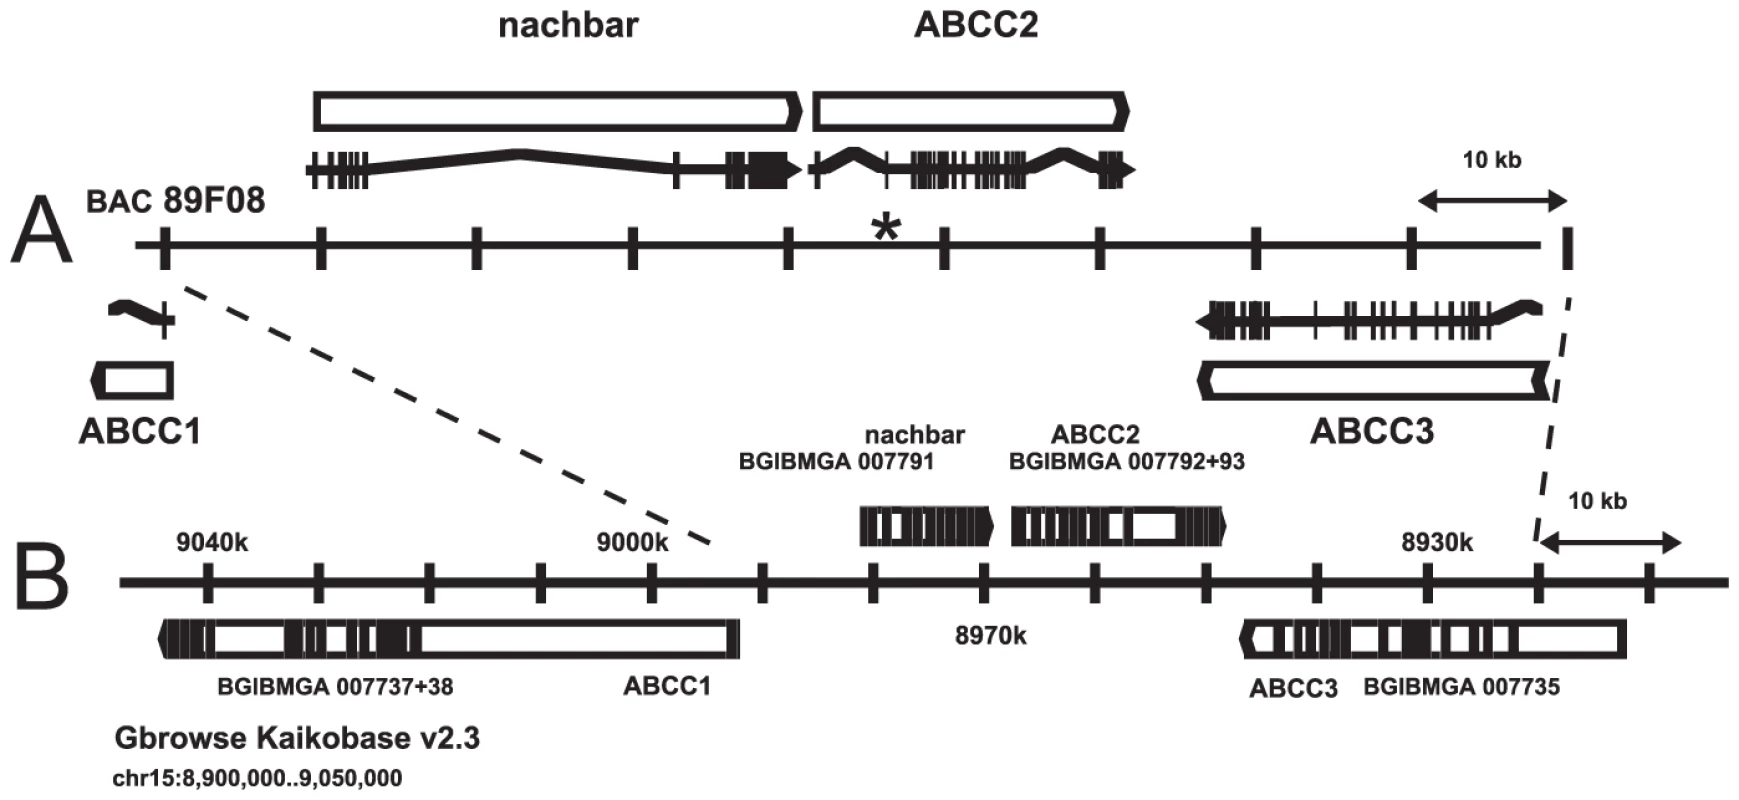 ABCC2 genomic region.